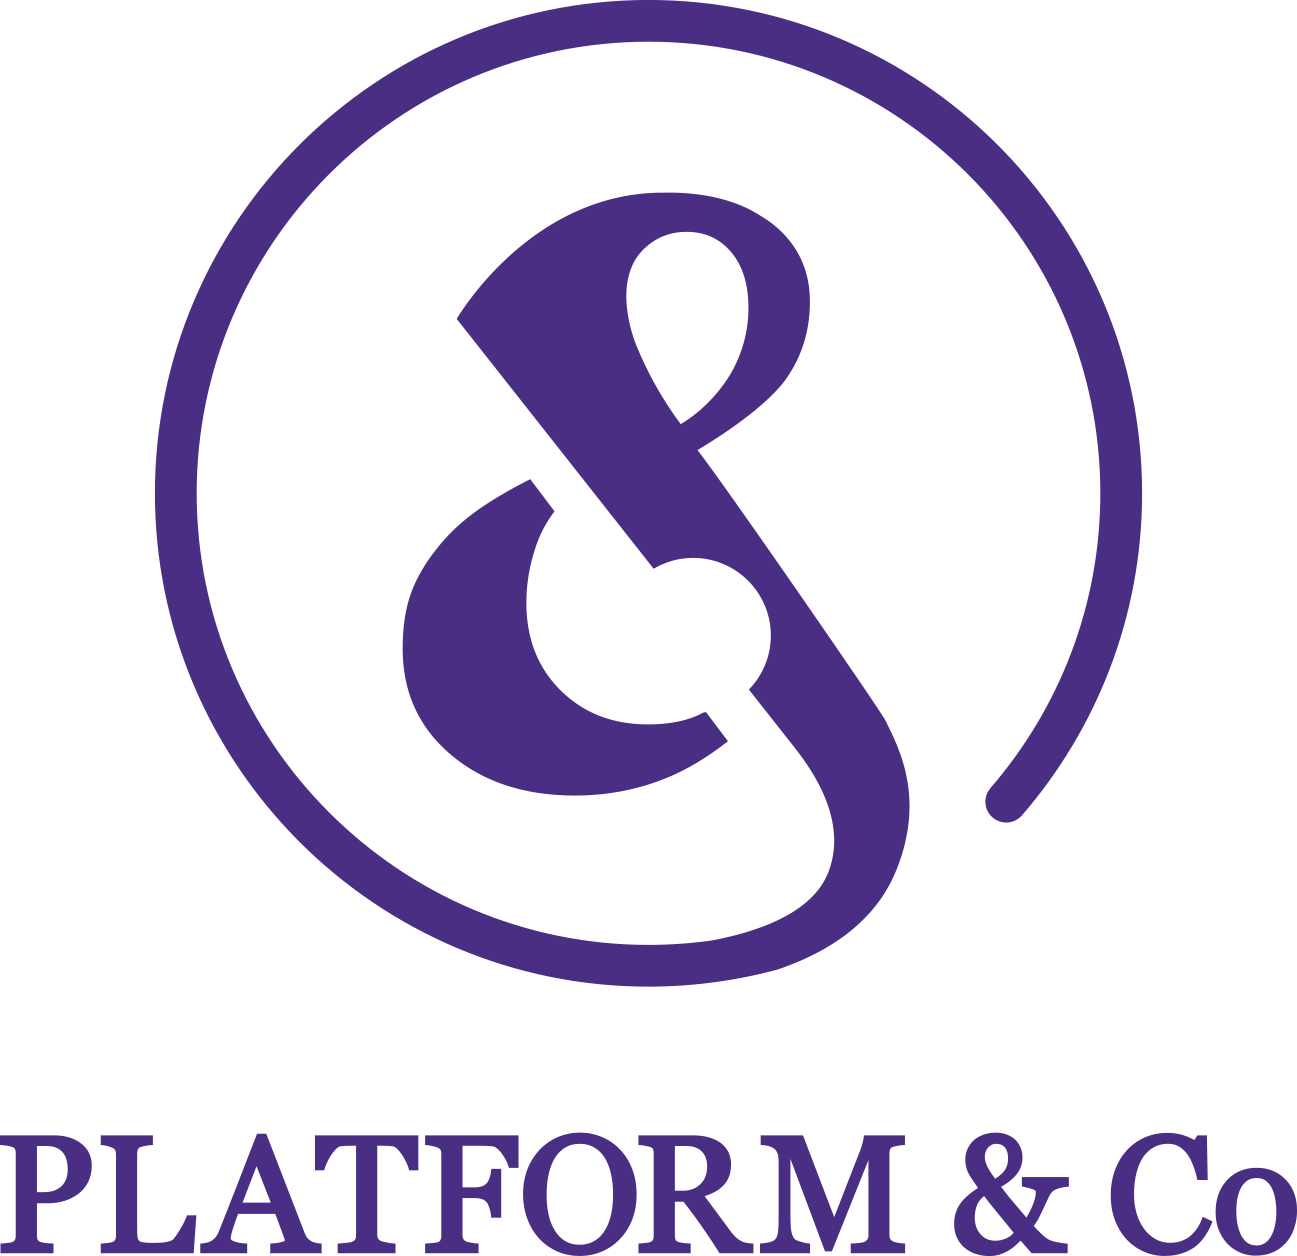 Platform&Co Pte Ltd is hiring on Meet.jobs!